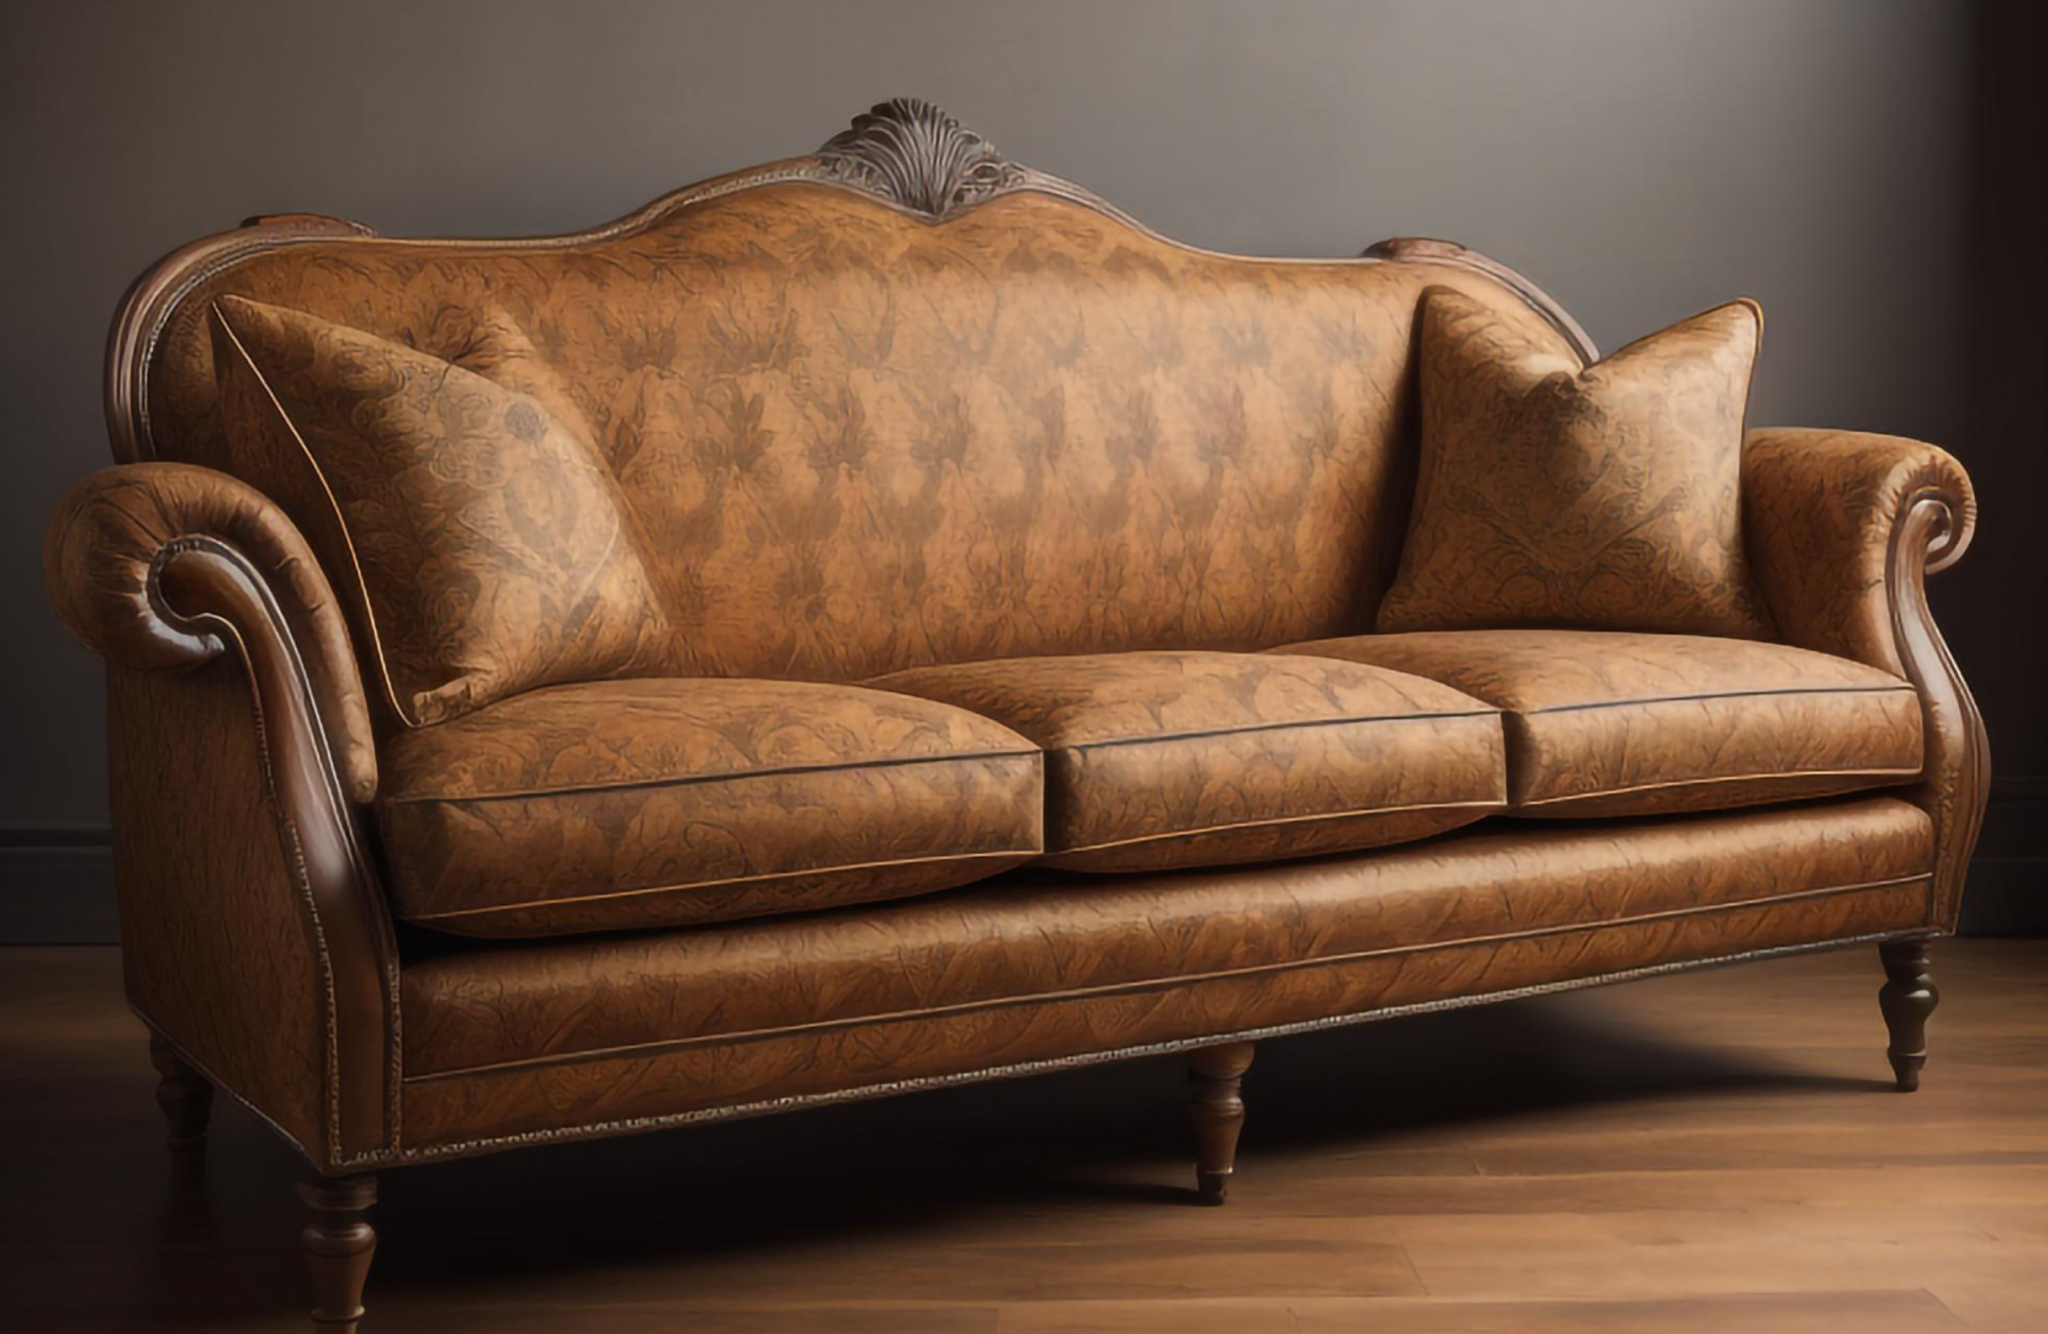 The Best Full Grain Leather Sofa You Shouldn’t Sleep On